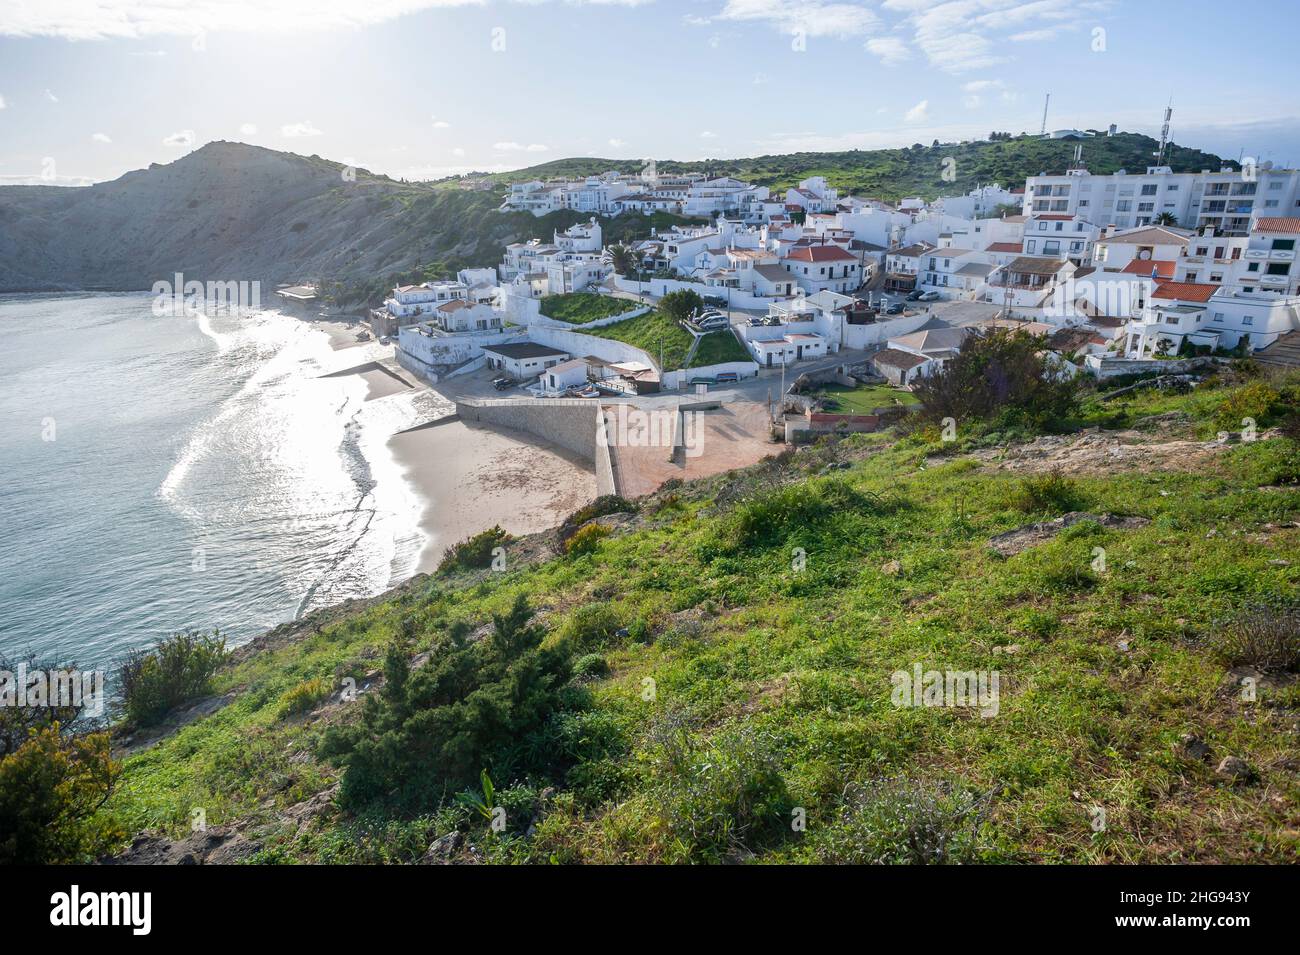 Village view with coastal landscape, Burgau, Algarve, Portugal, Europe Stock Photo